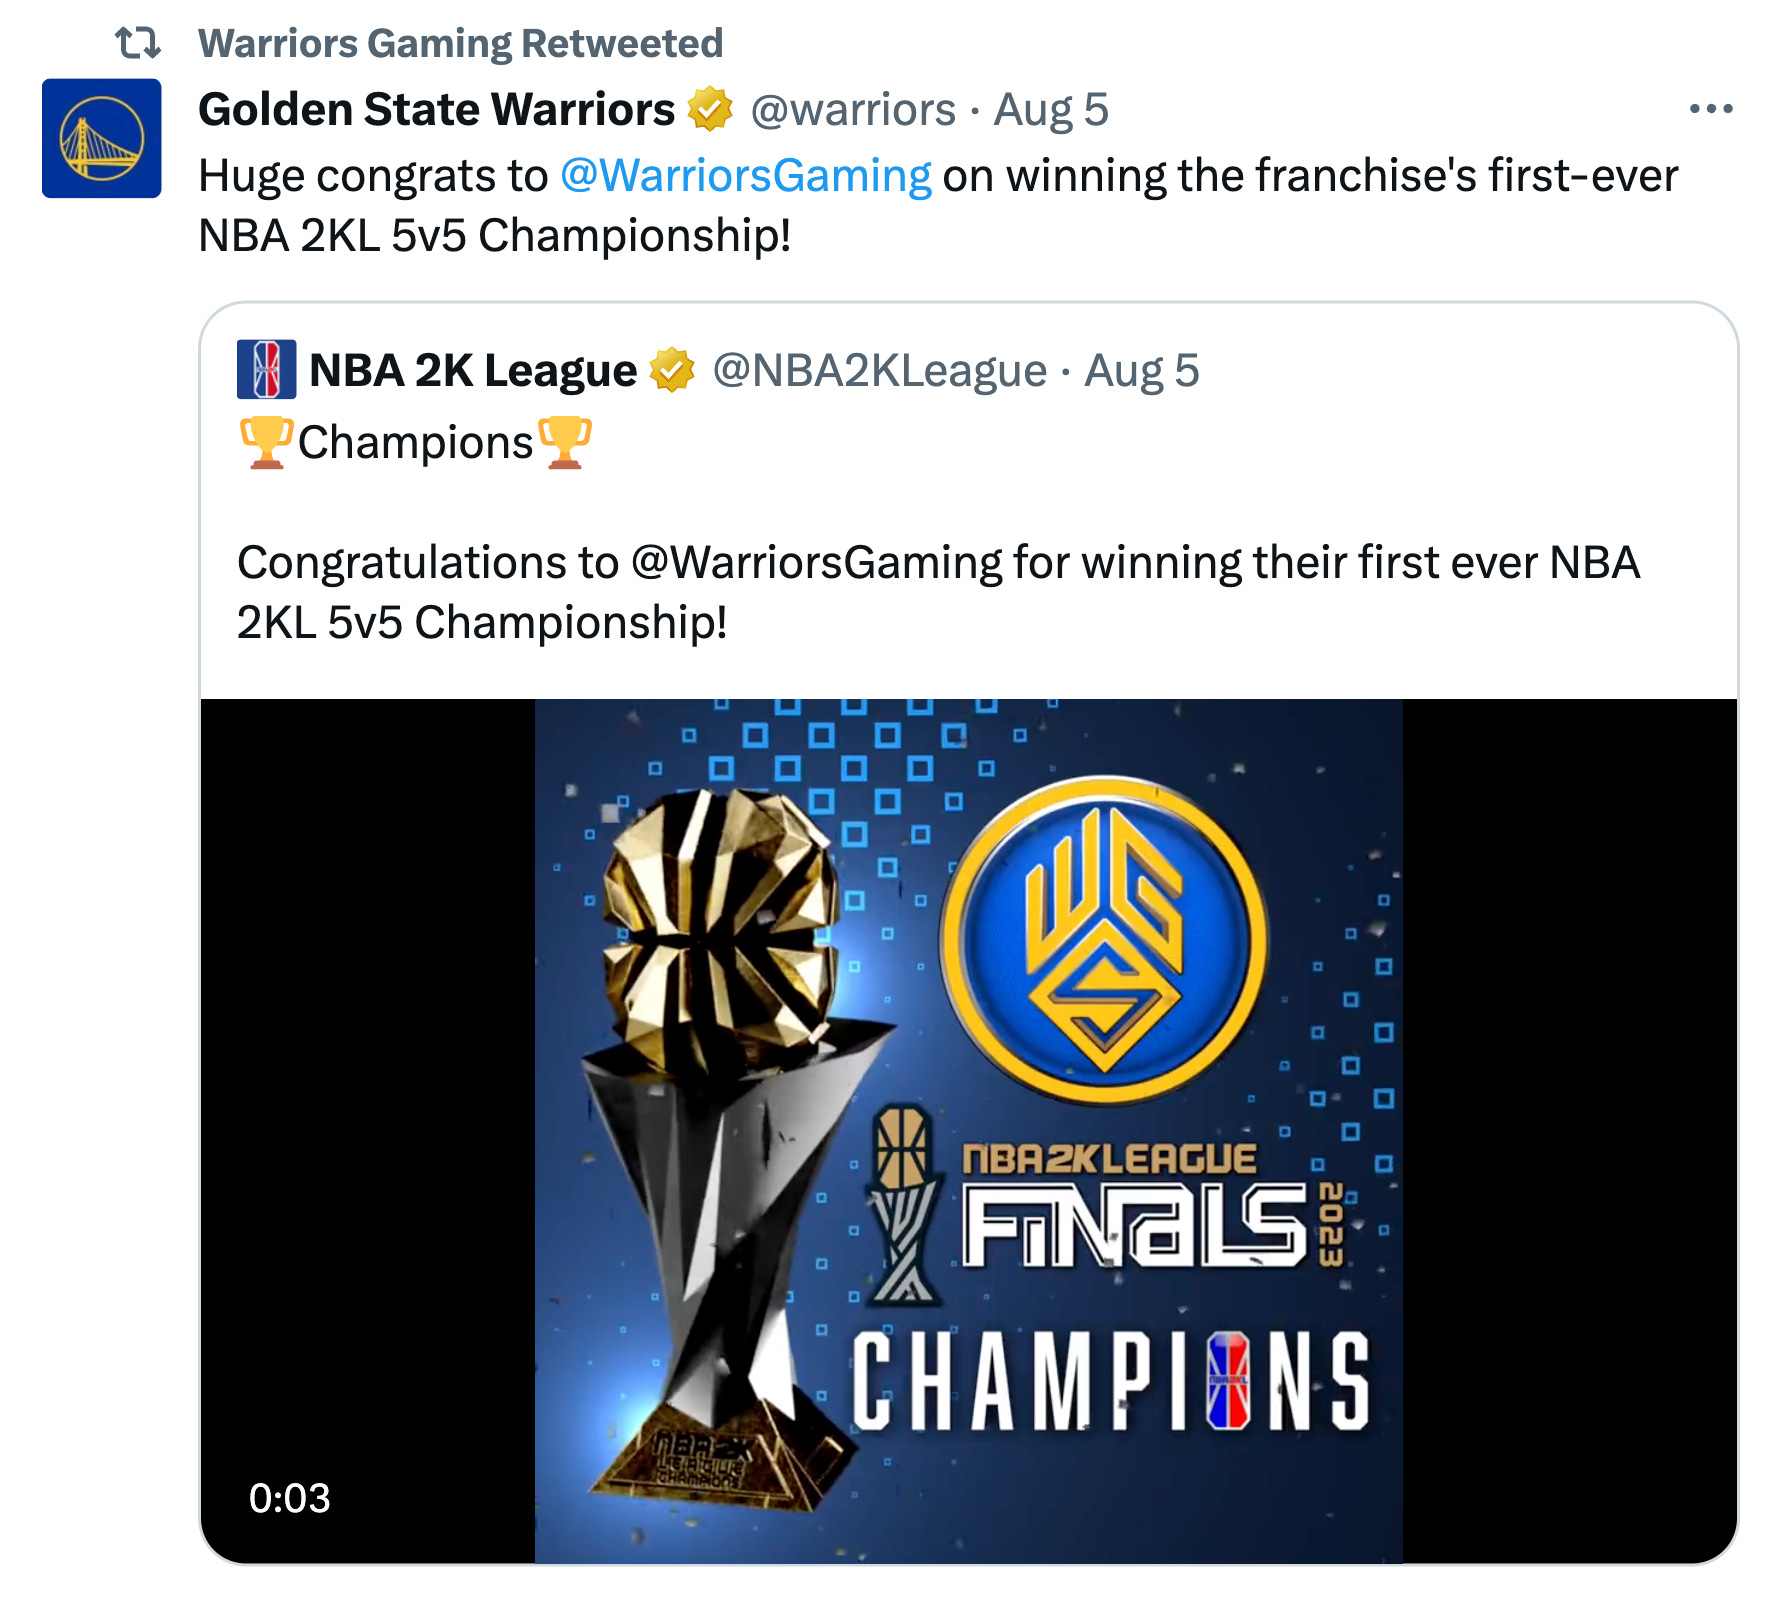 Bucks gaming wins NBA 2K League Championship